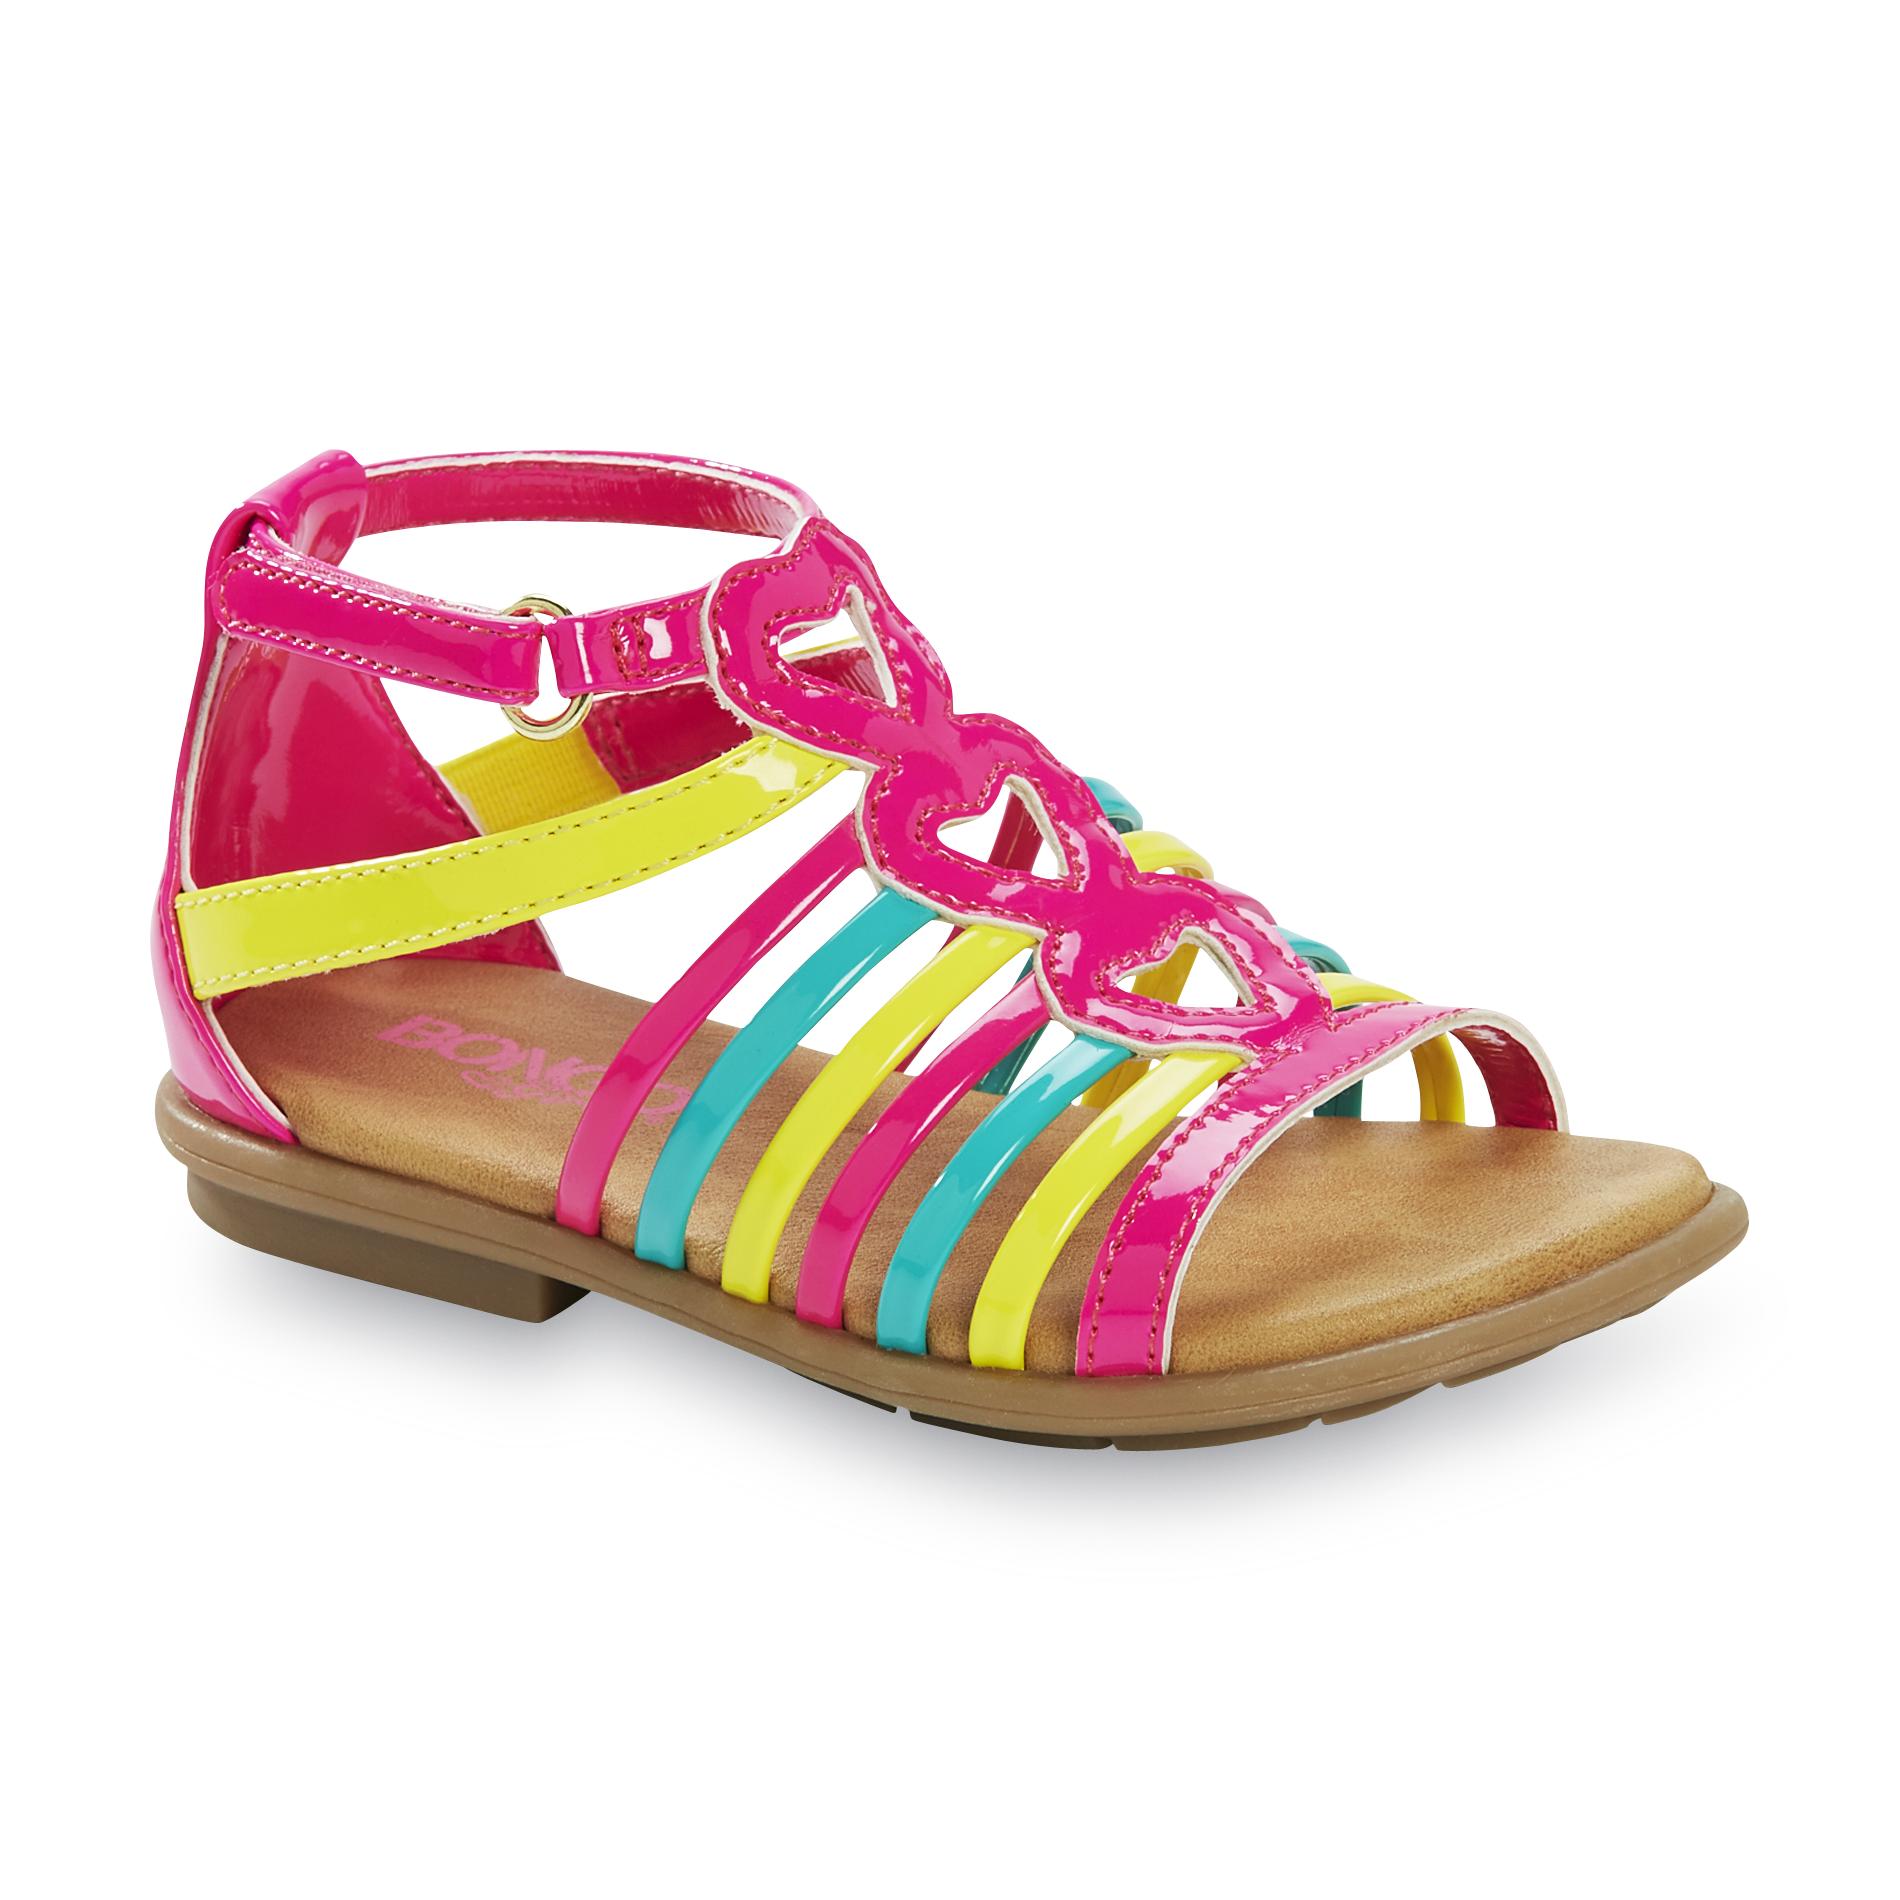 Bongo Toddler Girl's Fortuna Pink/Multicolor Strappy Sandal